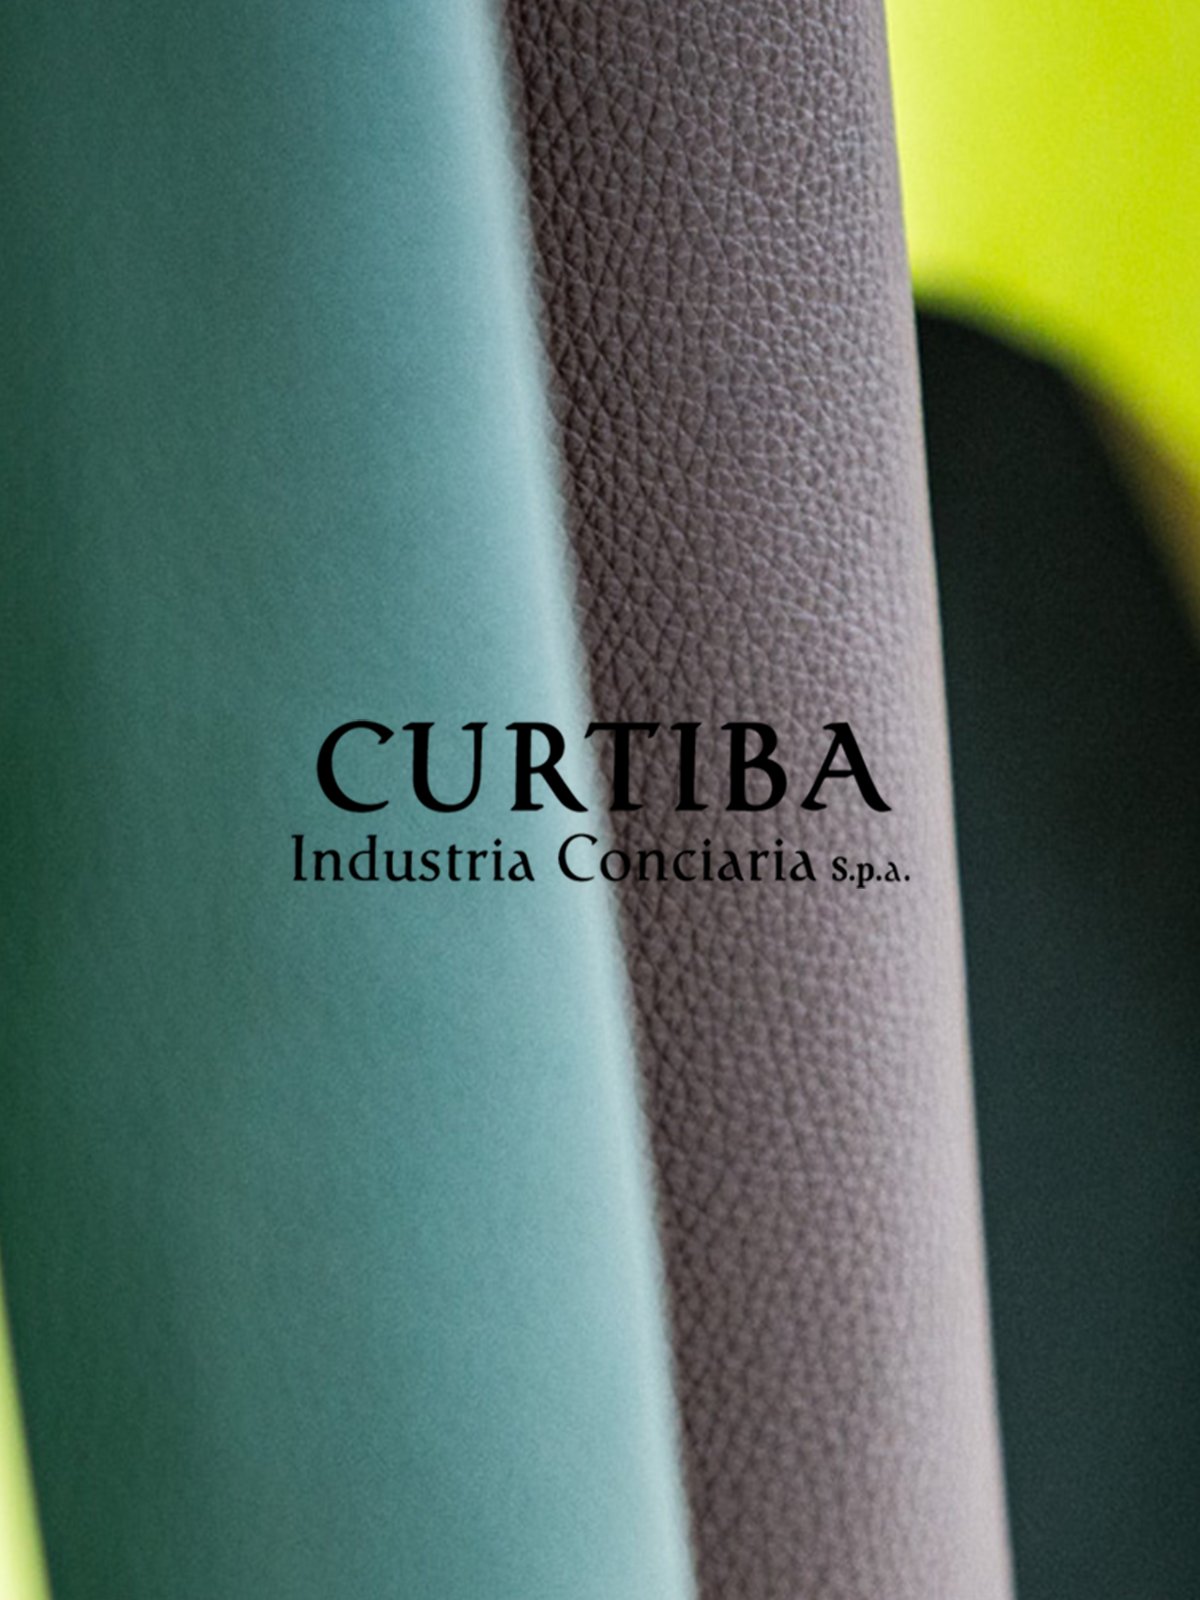 Leather&Luxury intervista Curtiba Industria Conciaria 